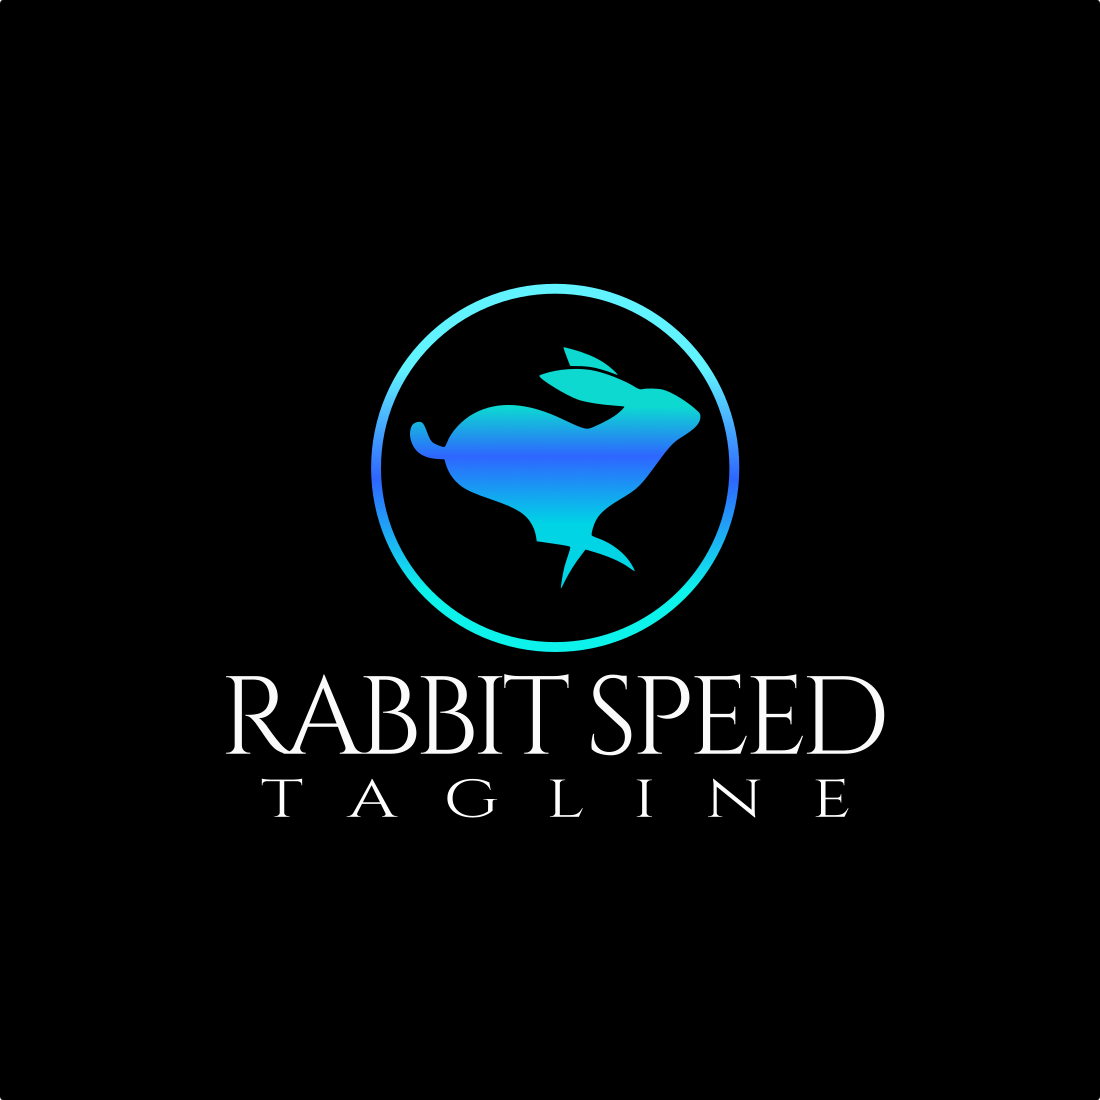 Rabbit Speed Custom Logo Design cover image.